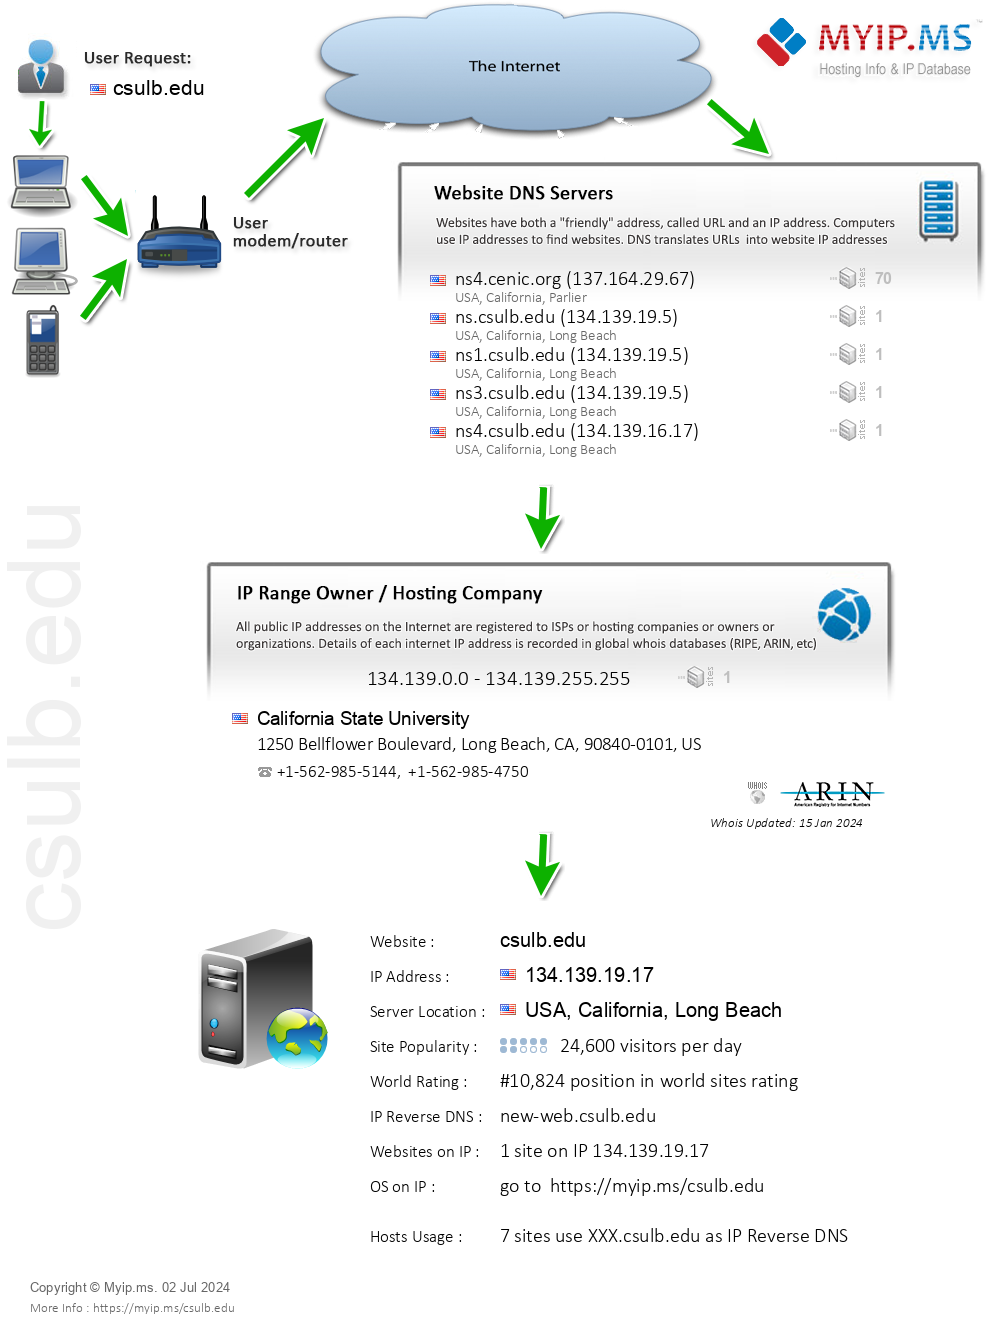 Csulb.edu - Website Hosting Visual IP Diagram